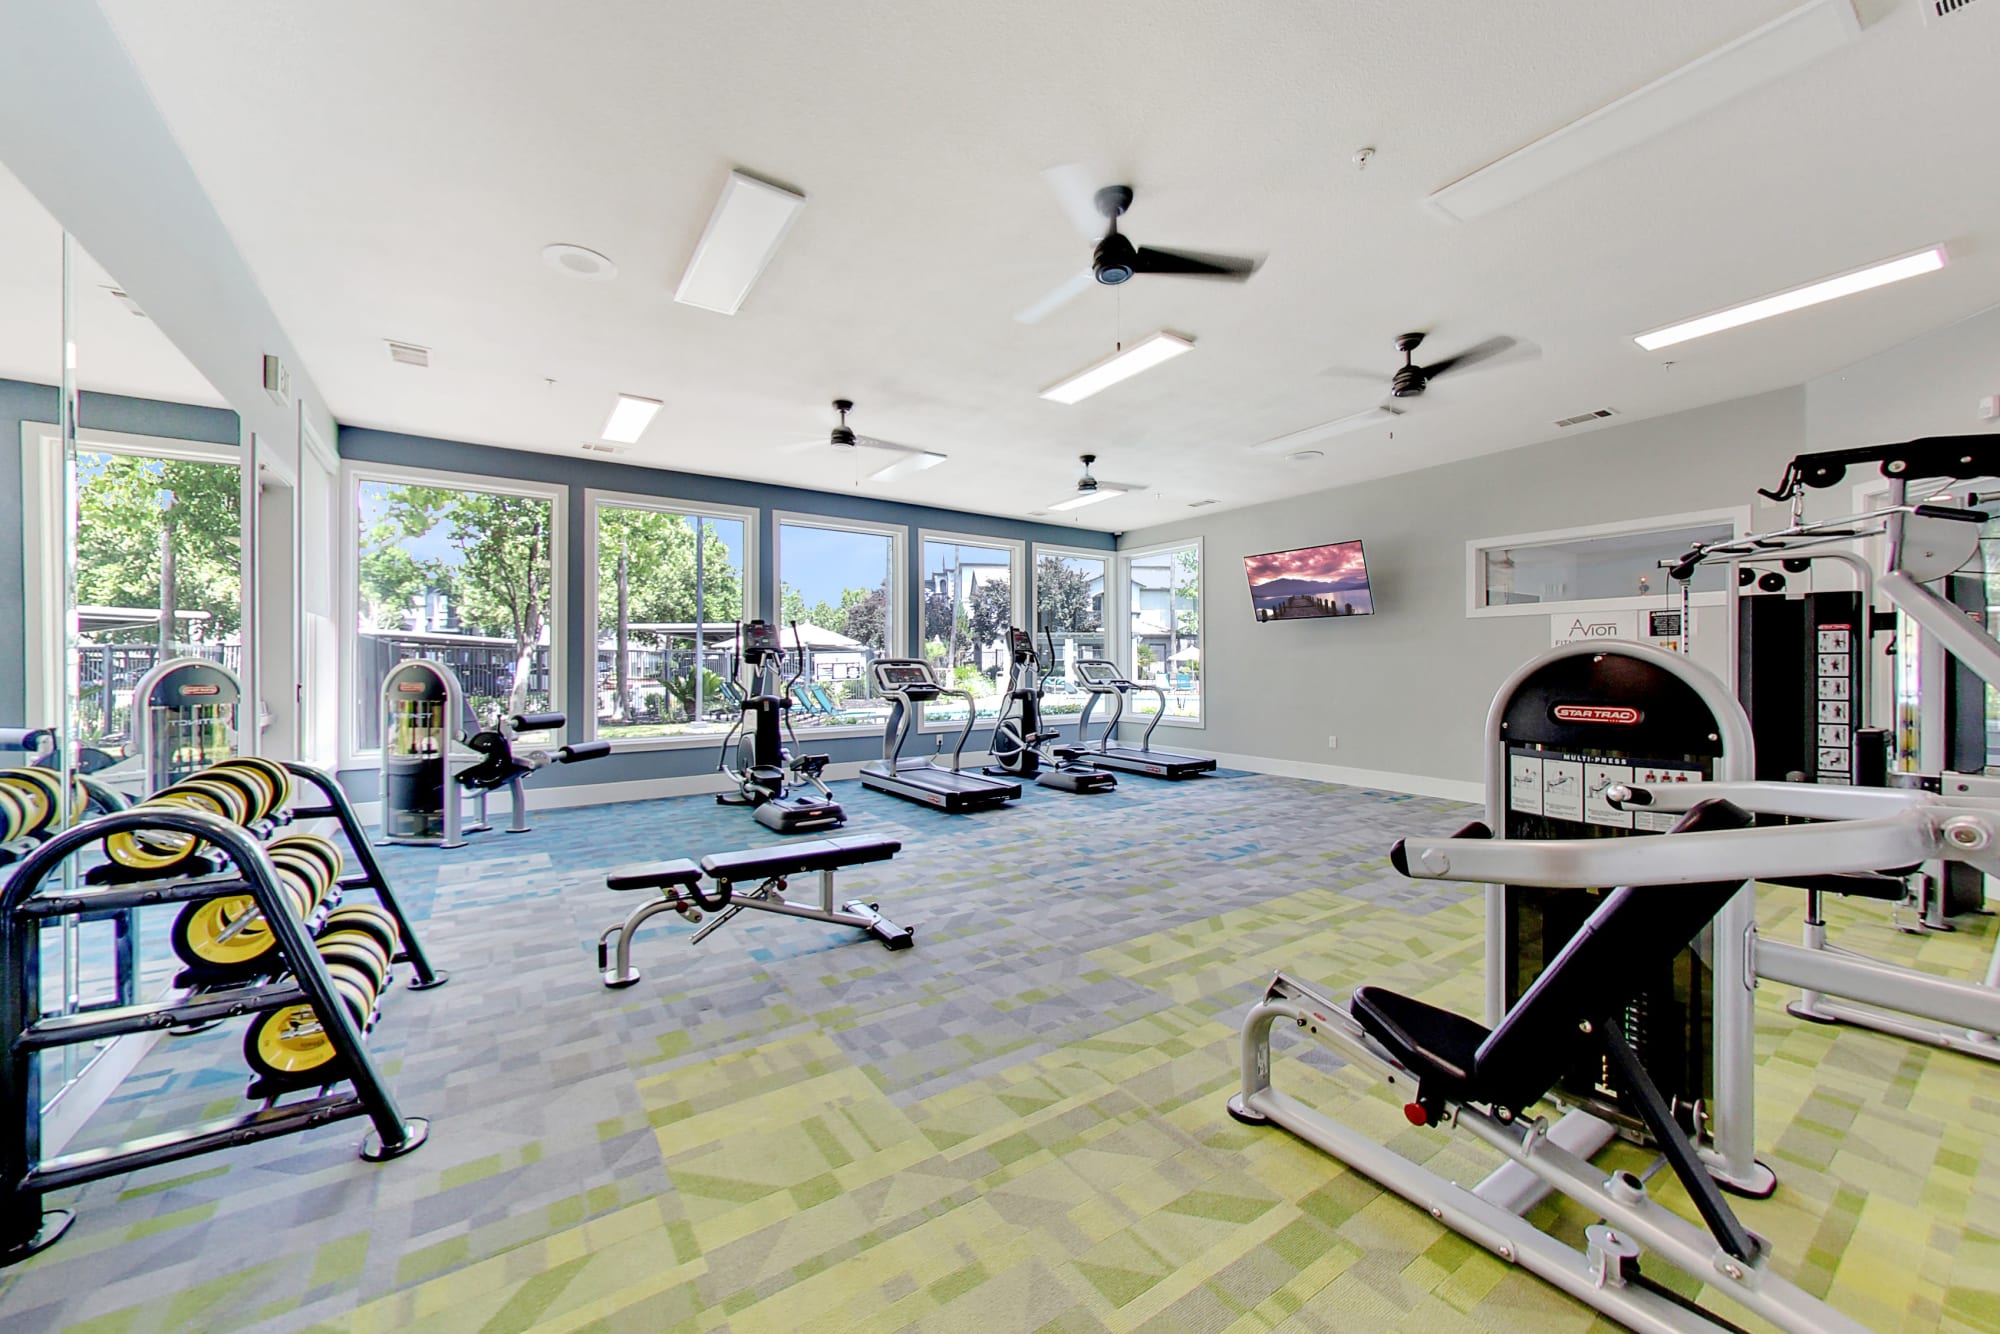 Community fitness center at Avion Apartments in Rancho Cordova, California